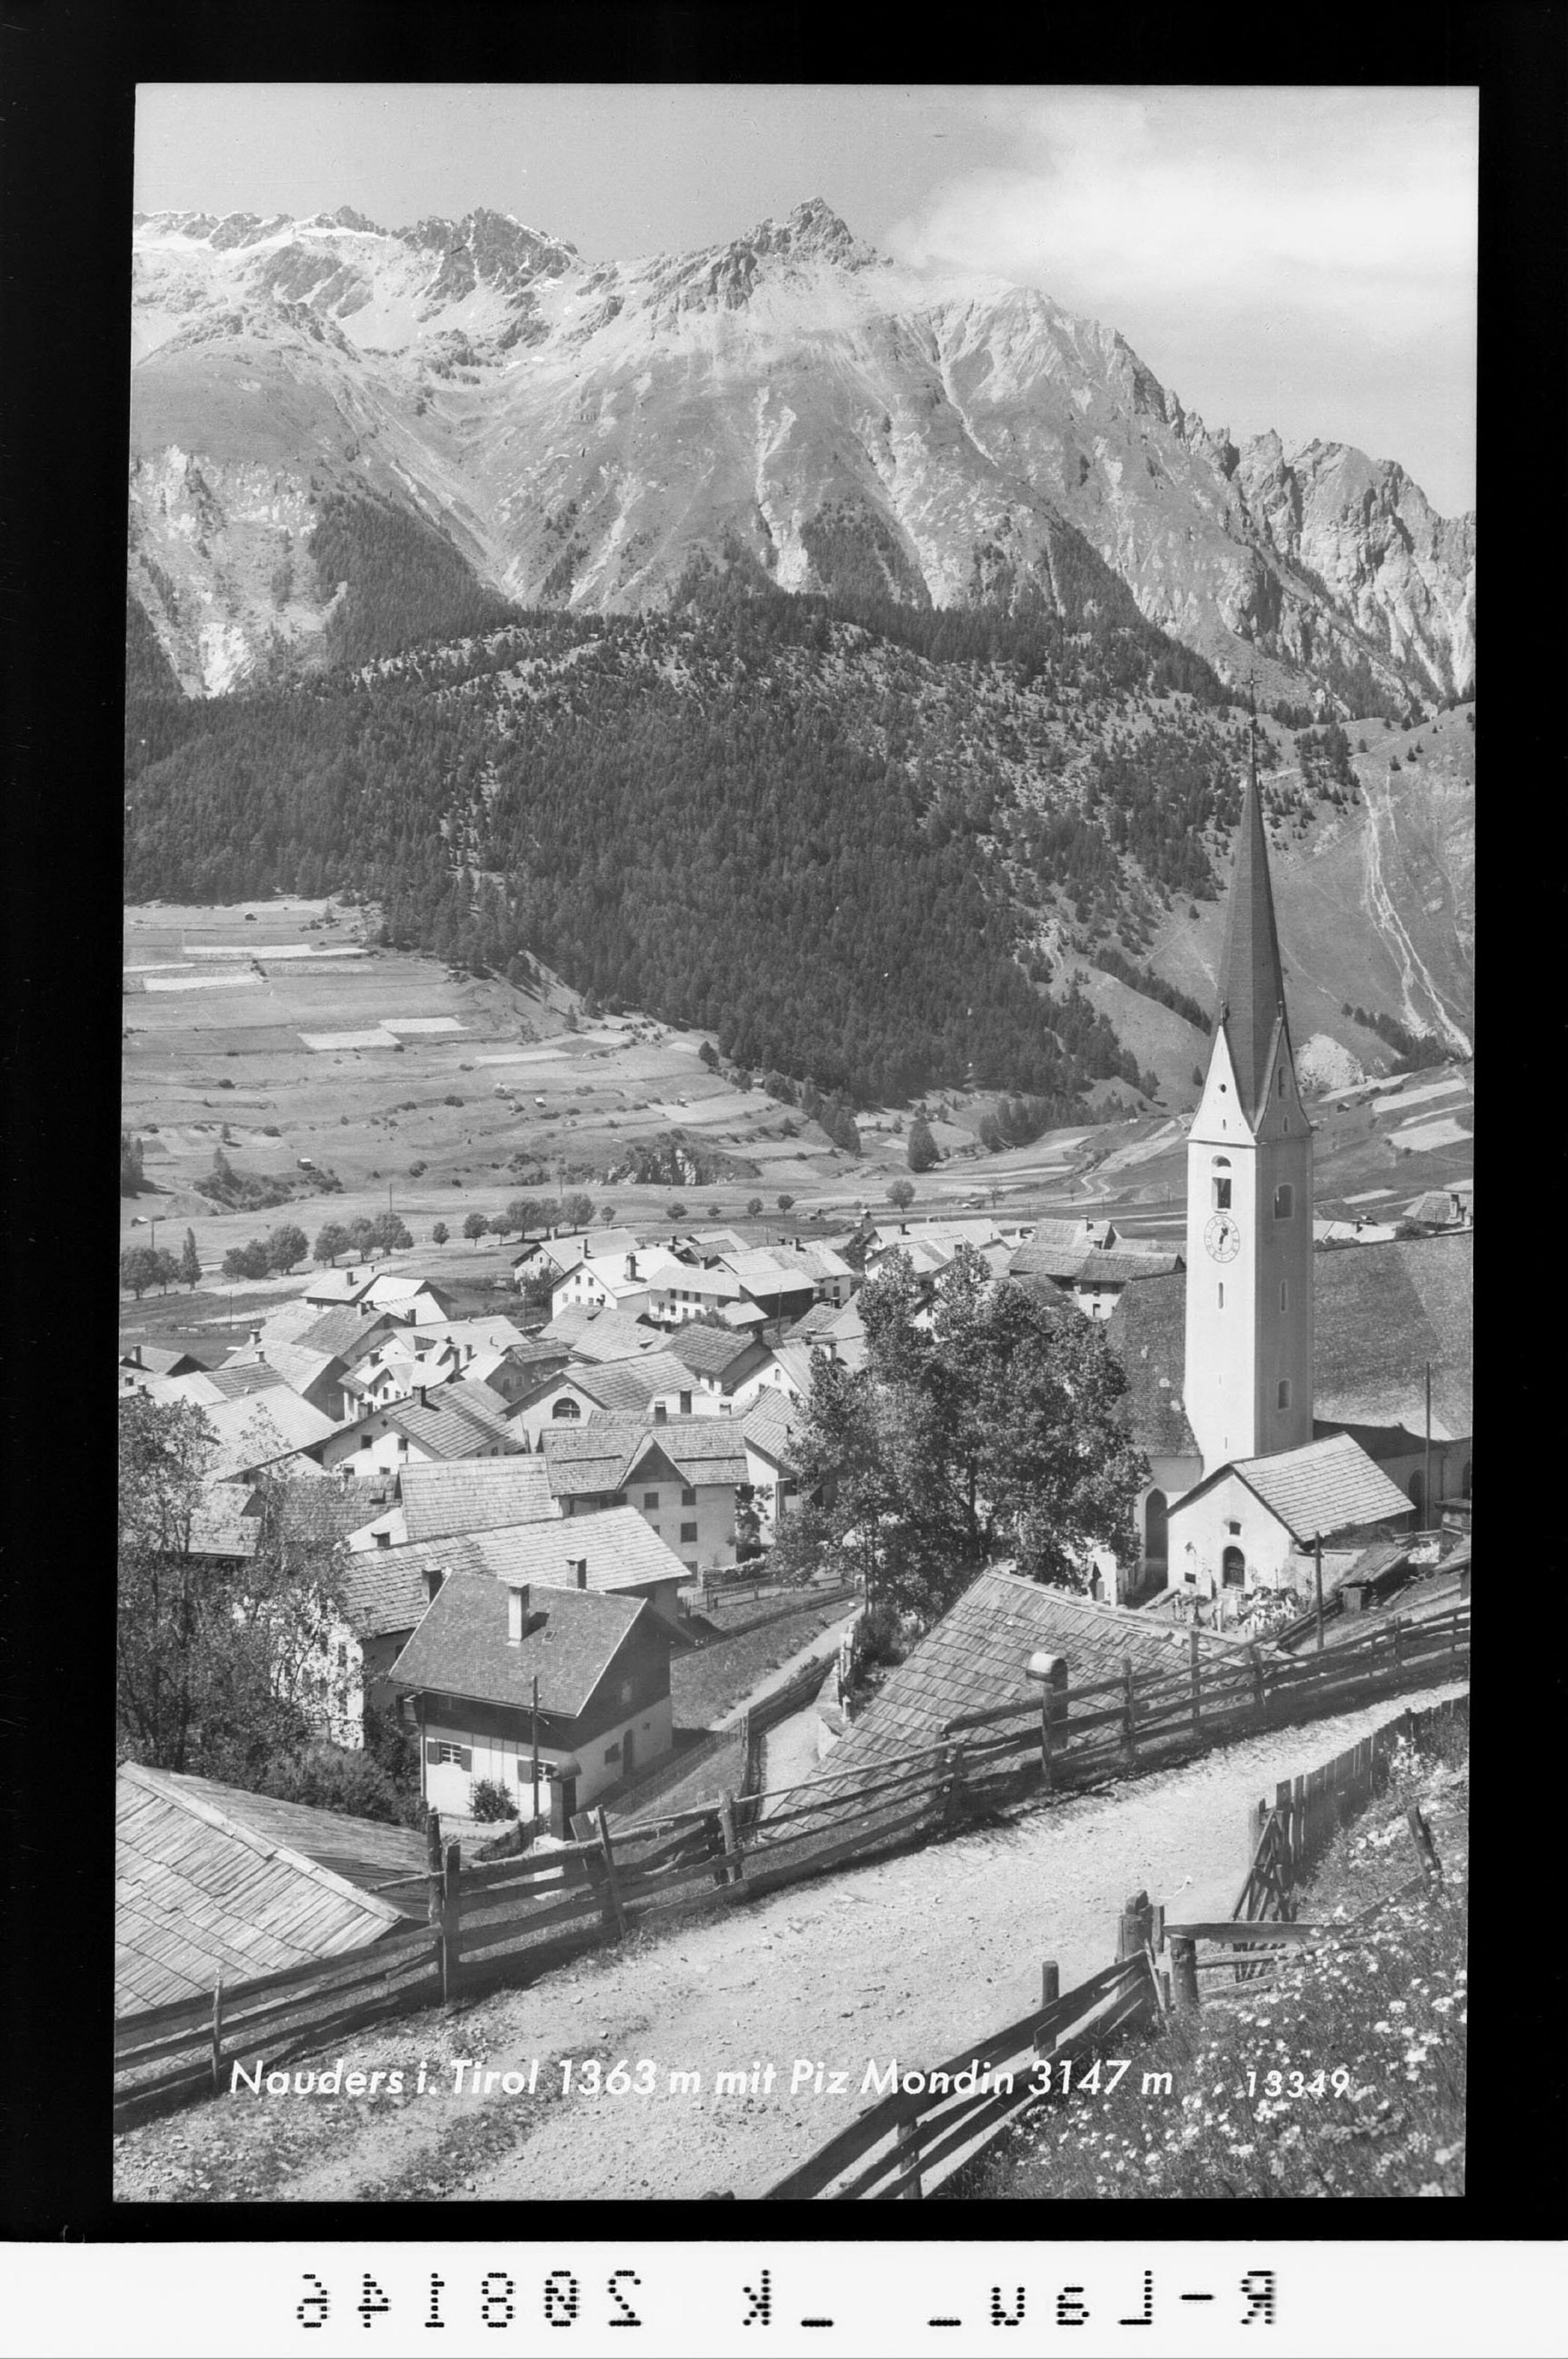 Nauders in Tirol 1363 m mit Piz Mondin 3147 m></div>


    <hr>
    <div class=